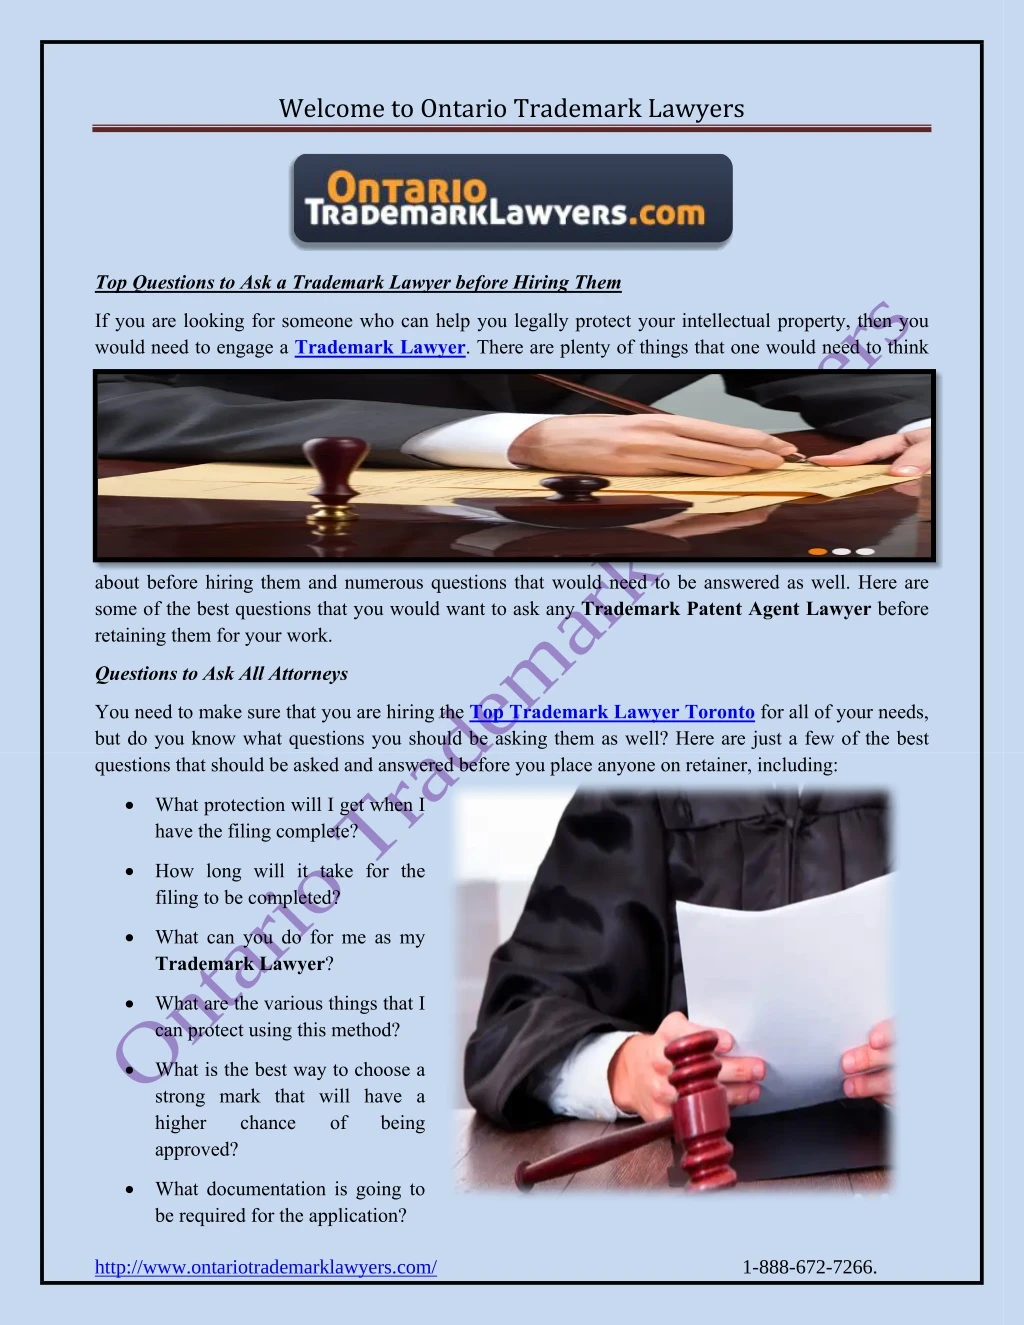 welcome to ontario trademark lawyers